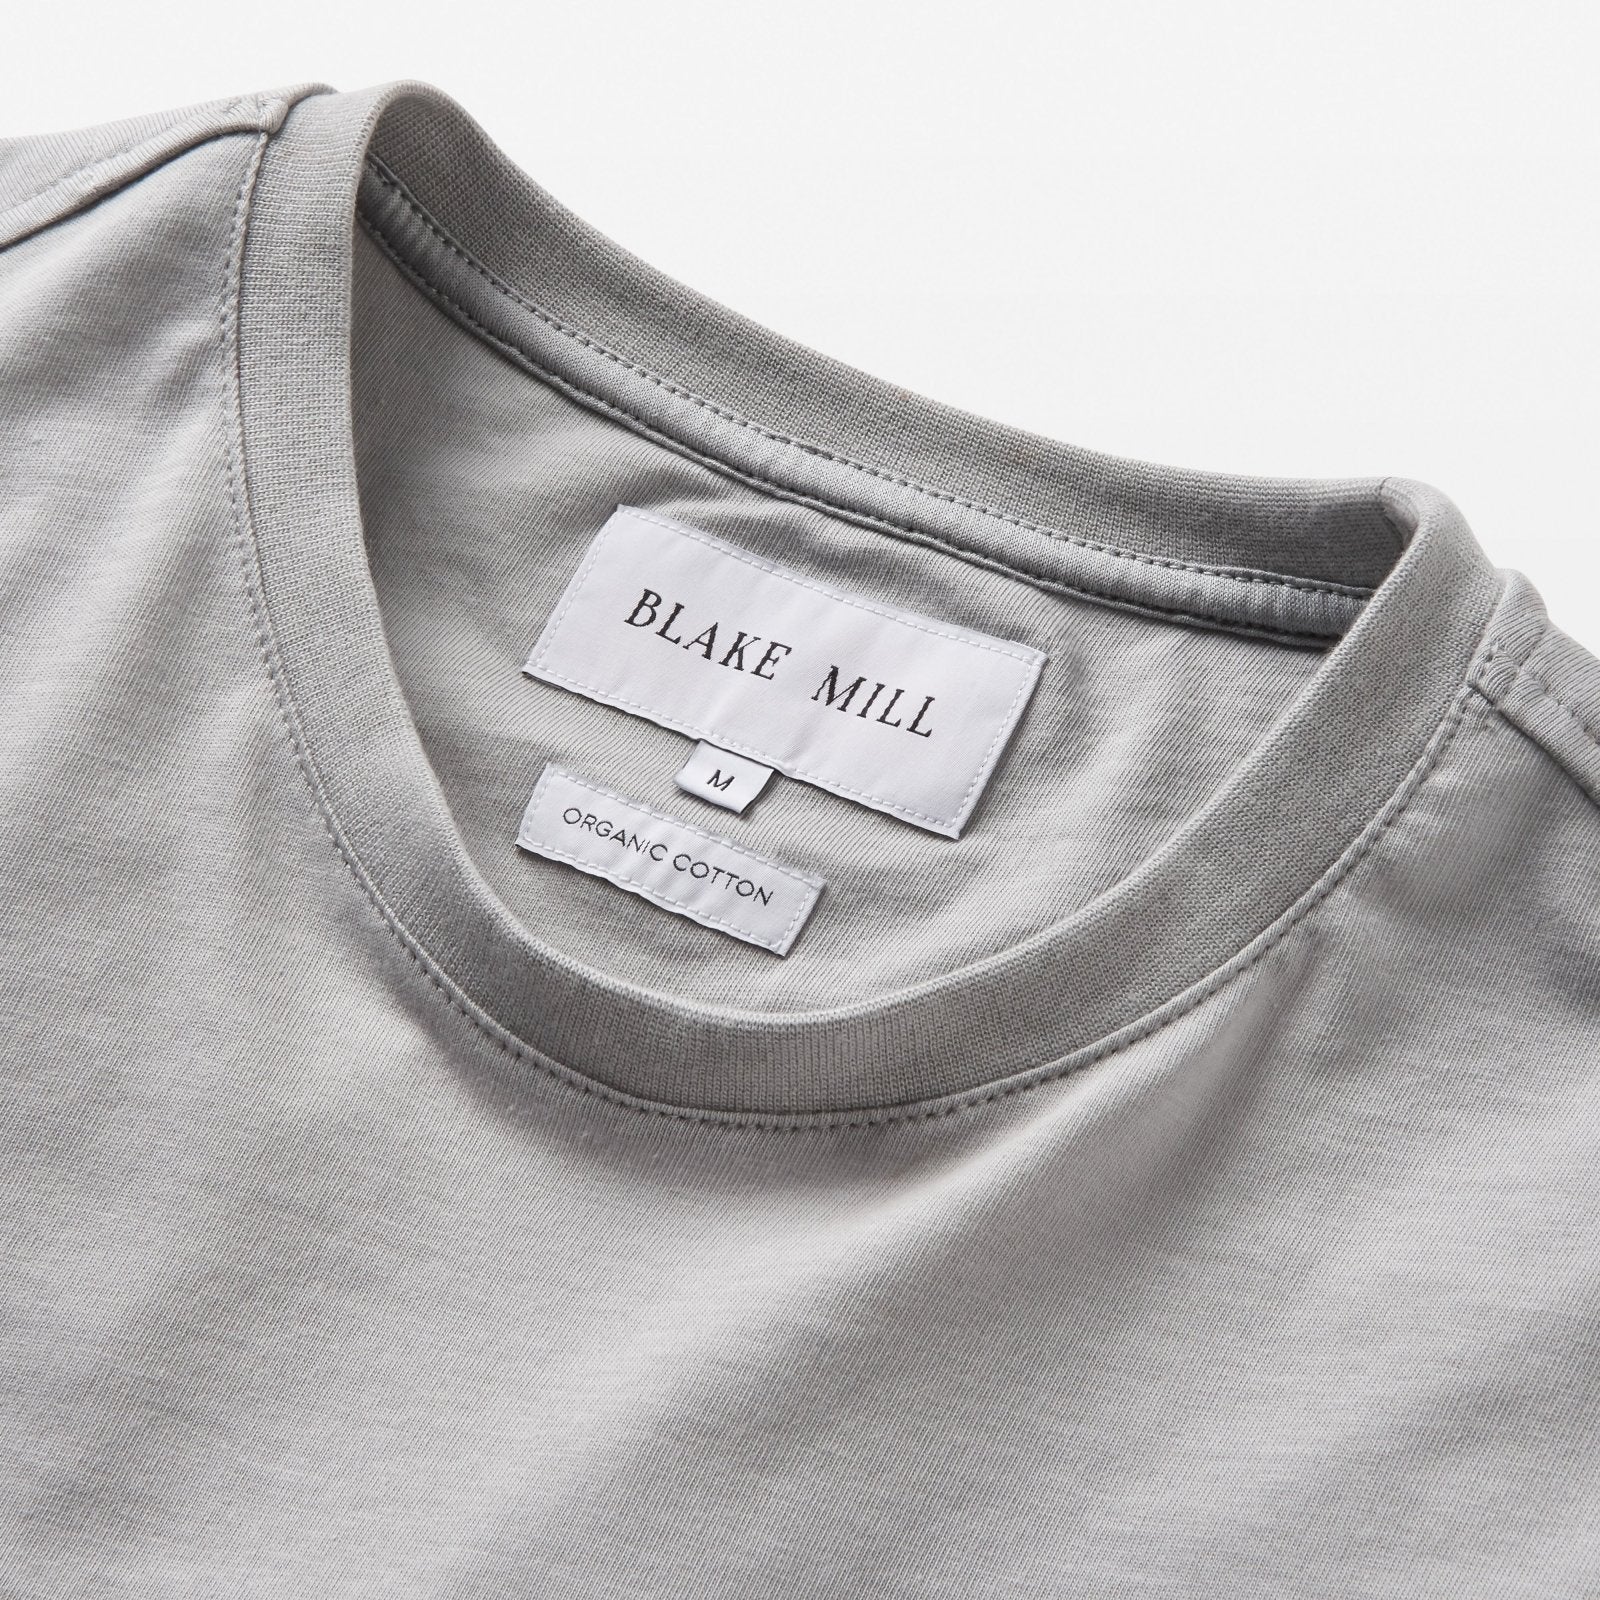 Mid Grey Organic Cotton T - Shirt - Blake Mill